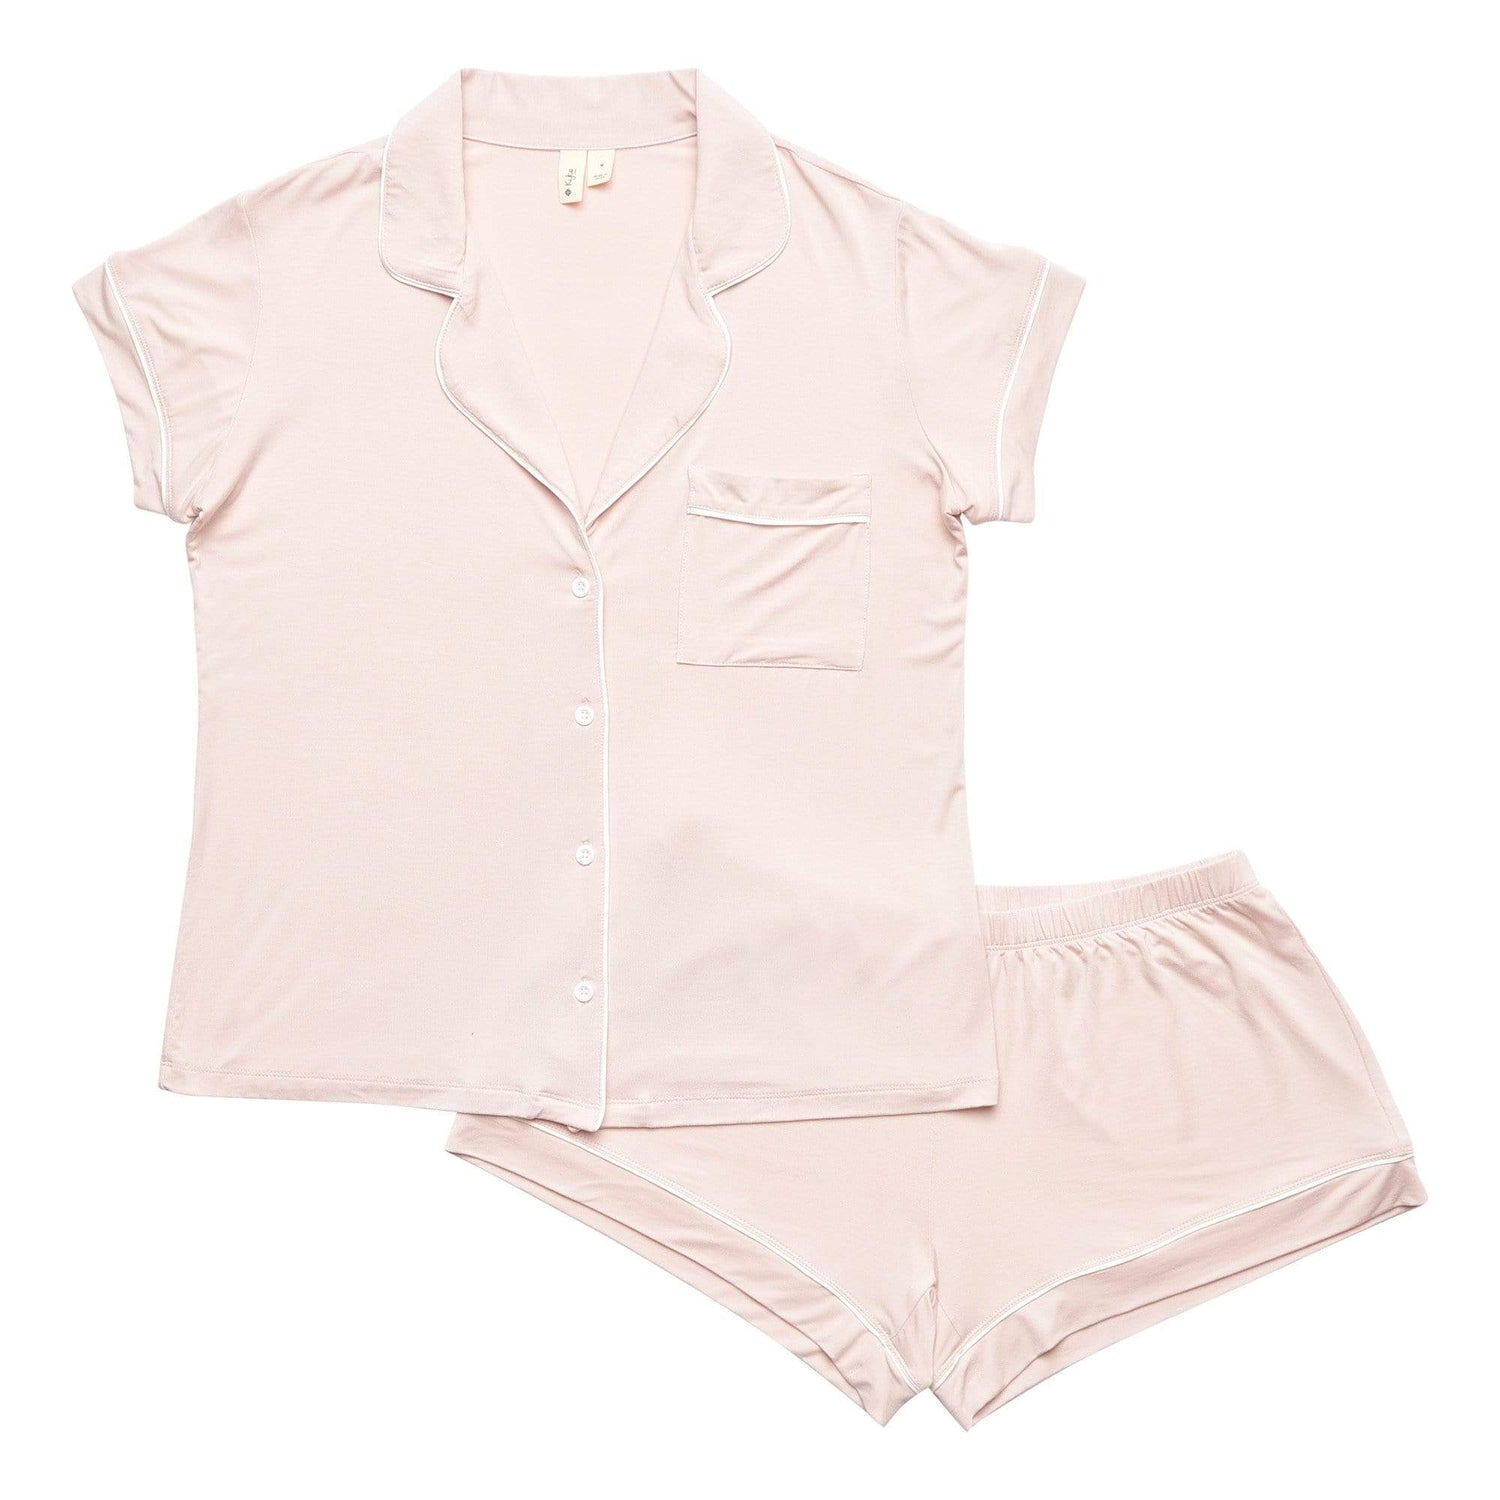 Women’s Short Sleeve Pajama Set in Blush with Cloud Trim